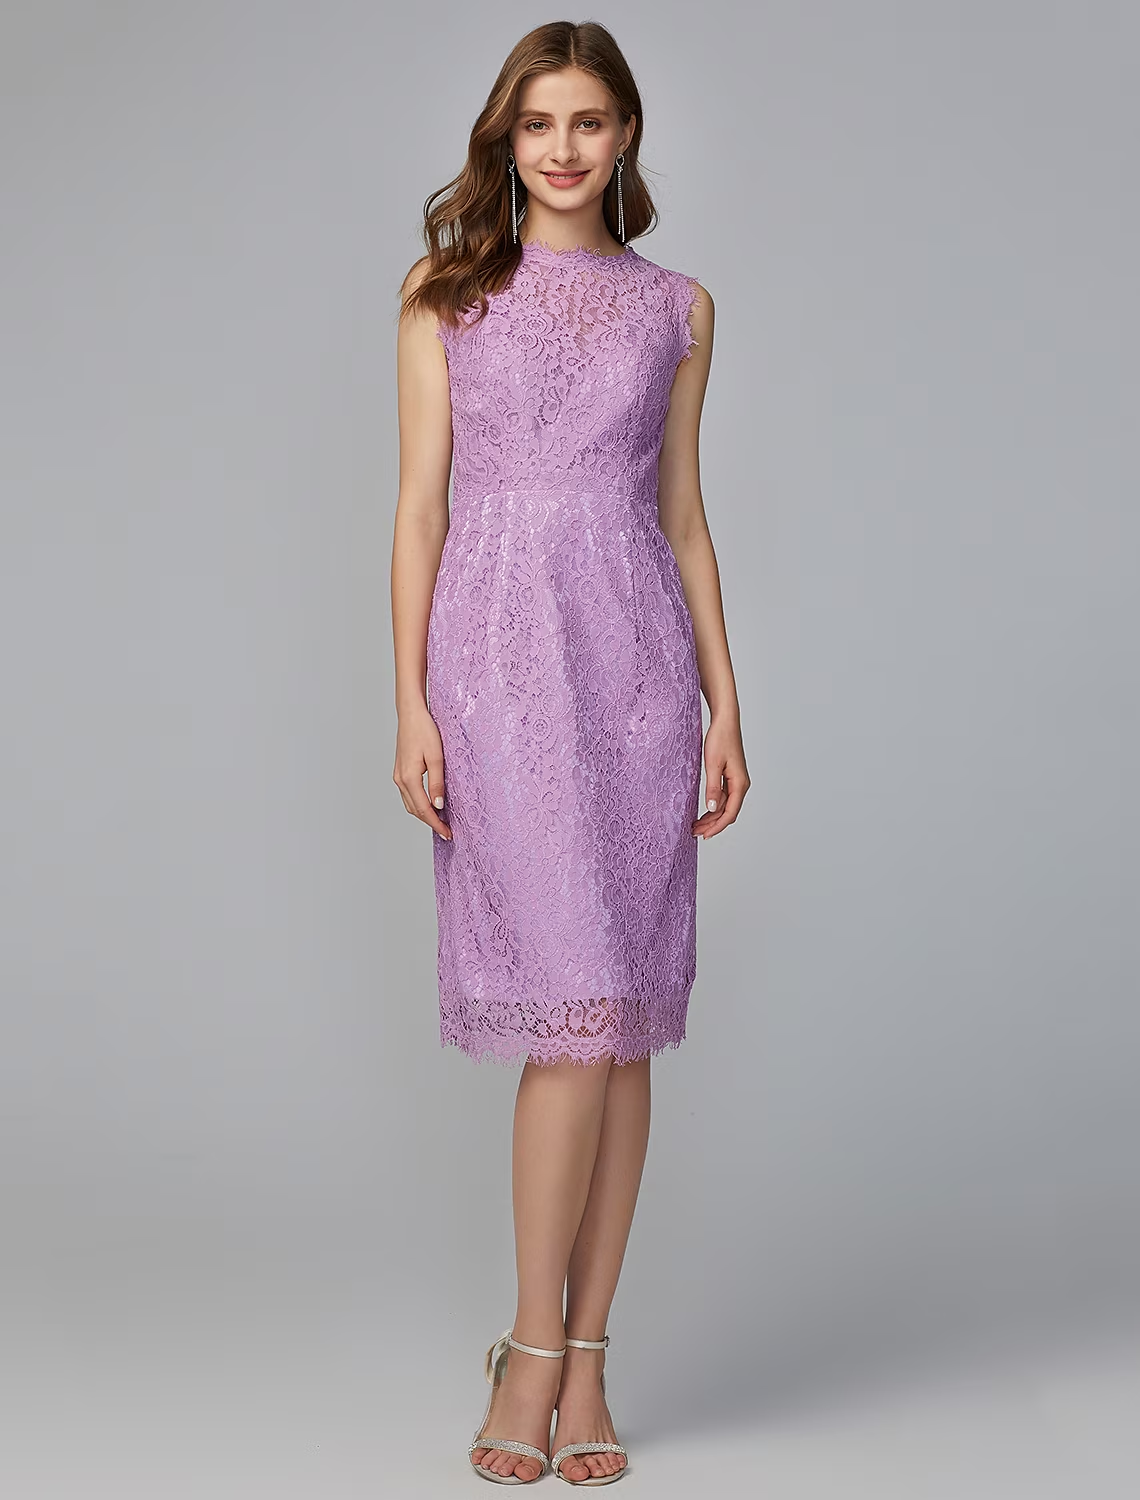 Sheath / Column Bridesmaid Dress Jewel Neck Sleeveless Elegant Midi / Knee Length Lace with Lace